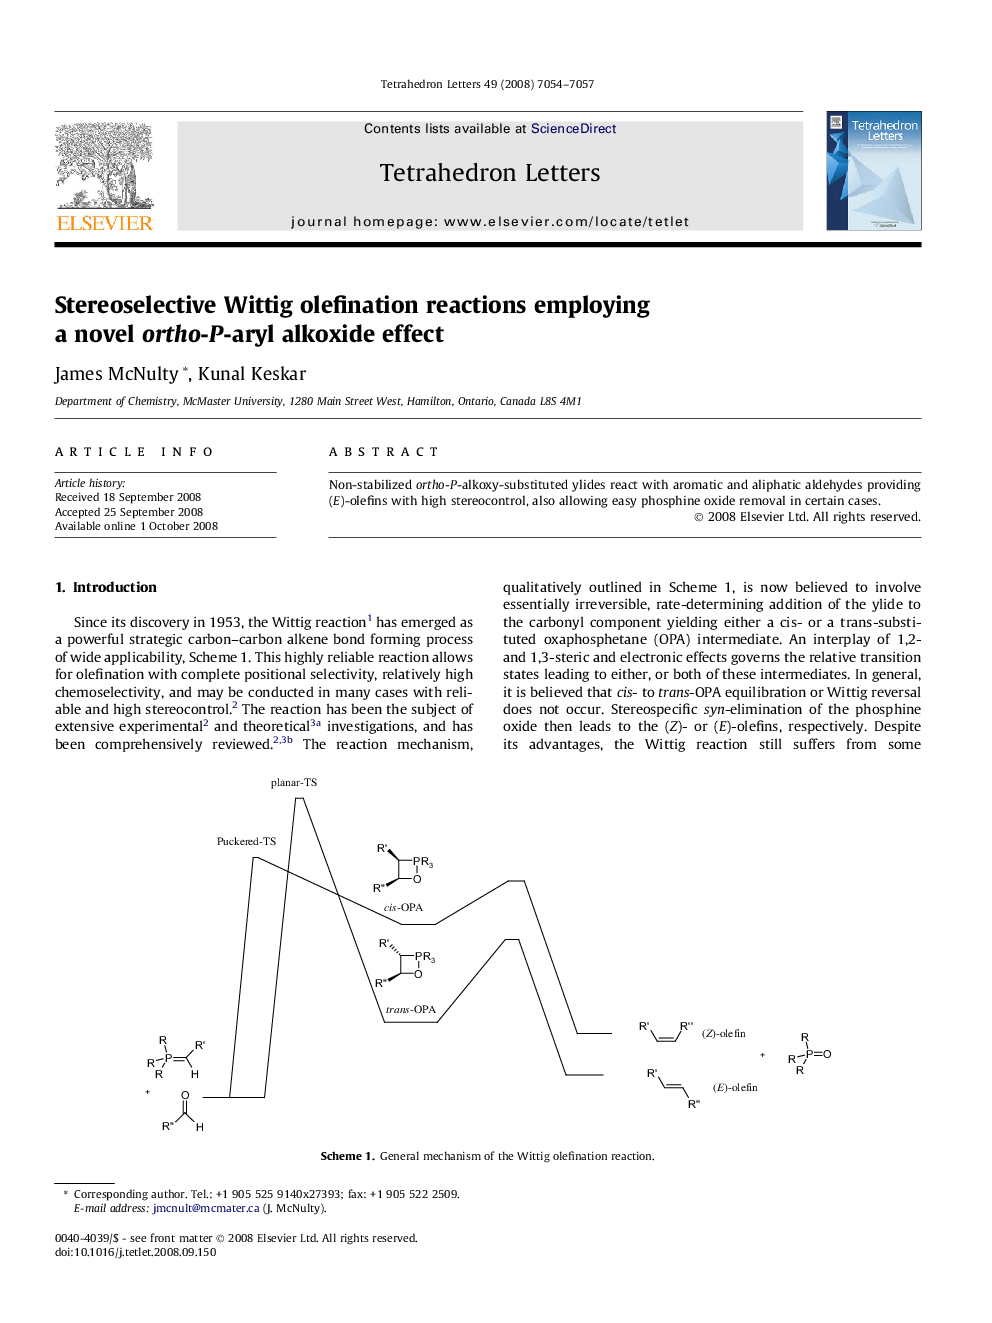 Stereoselective Wittig olefination reactions employing a novel ortho-P-aryl alkoxide effect